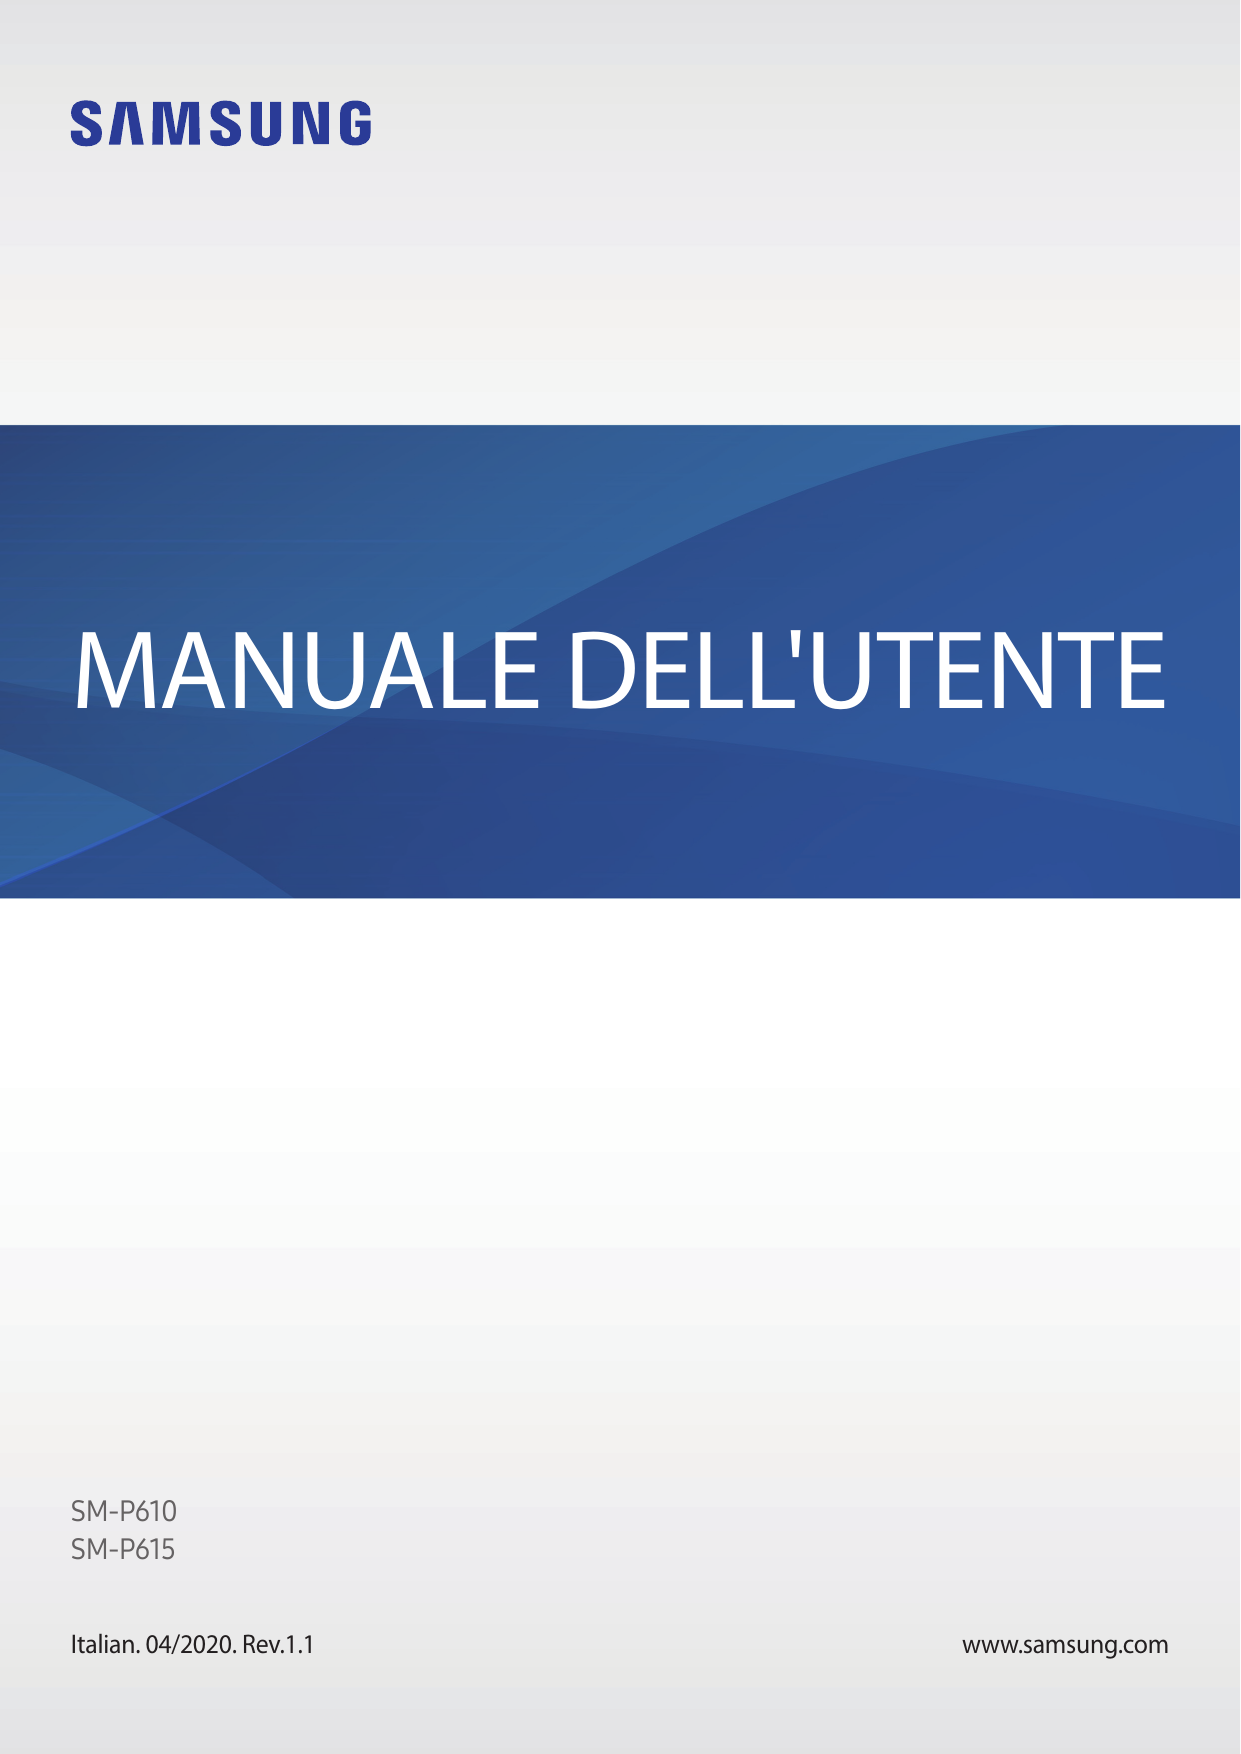 MANUALE DELL'UTENTESM-P610SM-P615Italian. 04/2020. Rev.1.1www.samsung.com